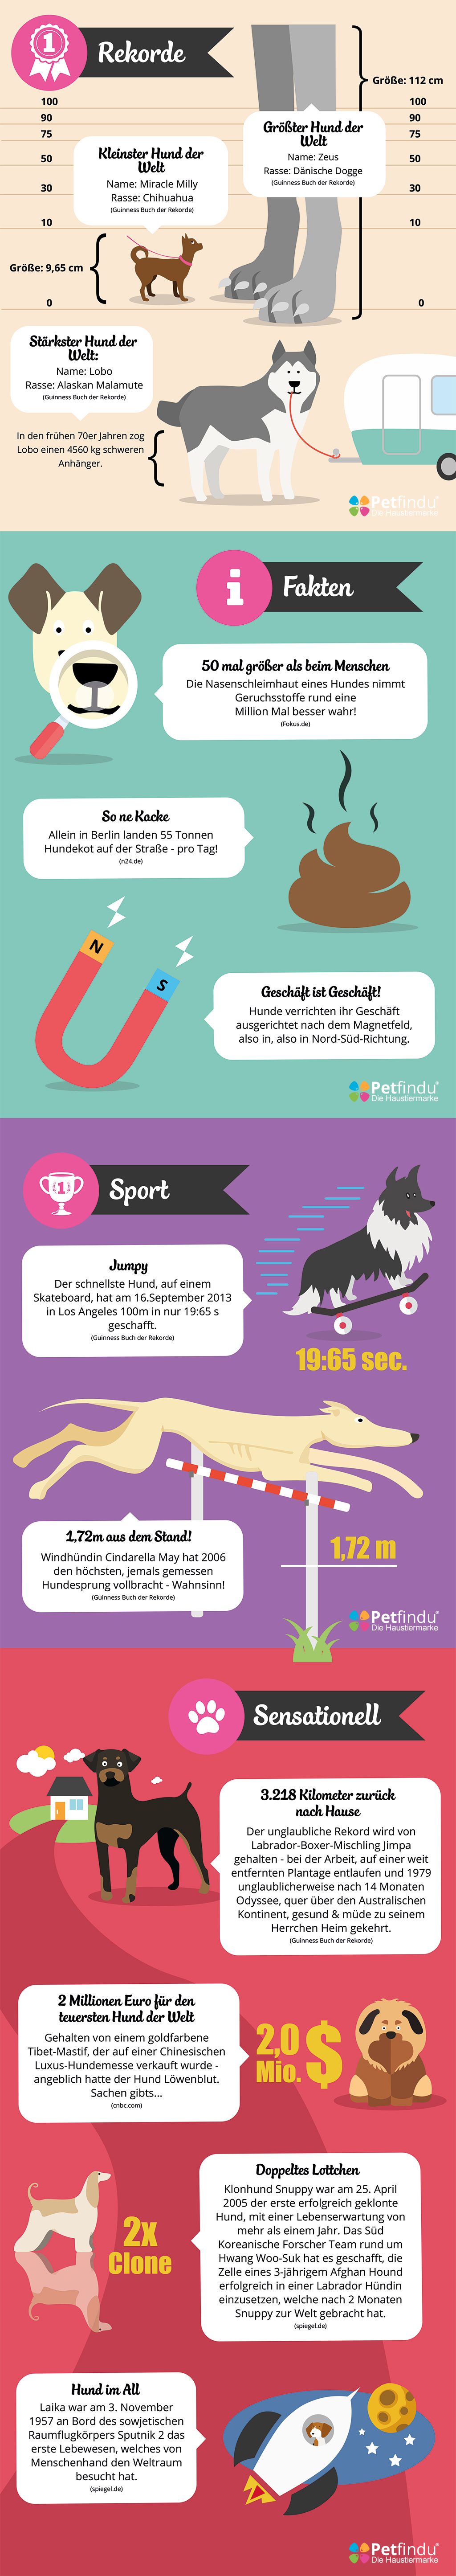 Die 12 kuriosesten Fakten über Hunde Petfindu Blog